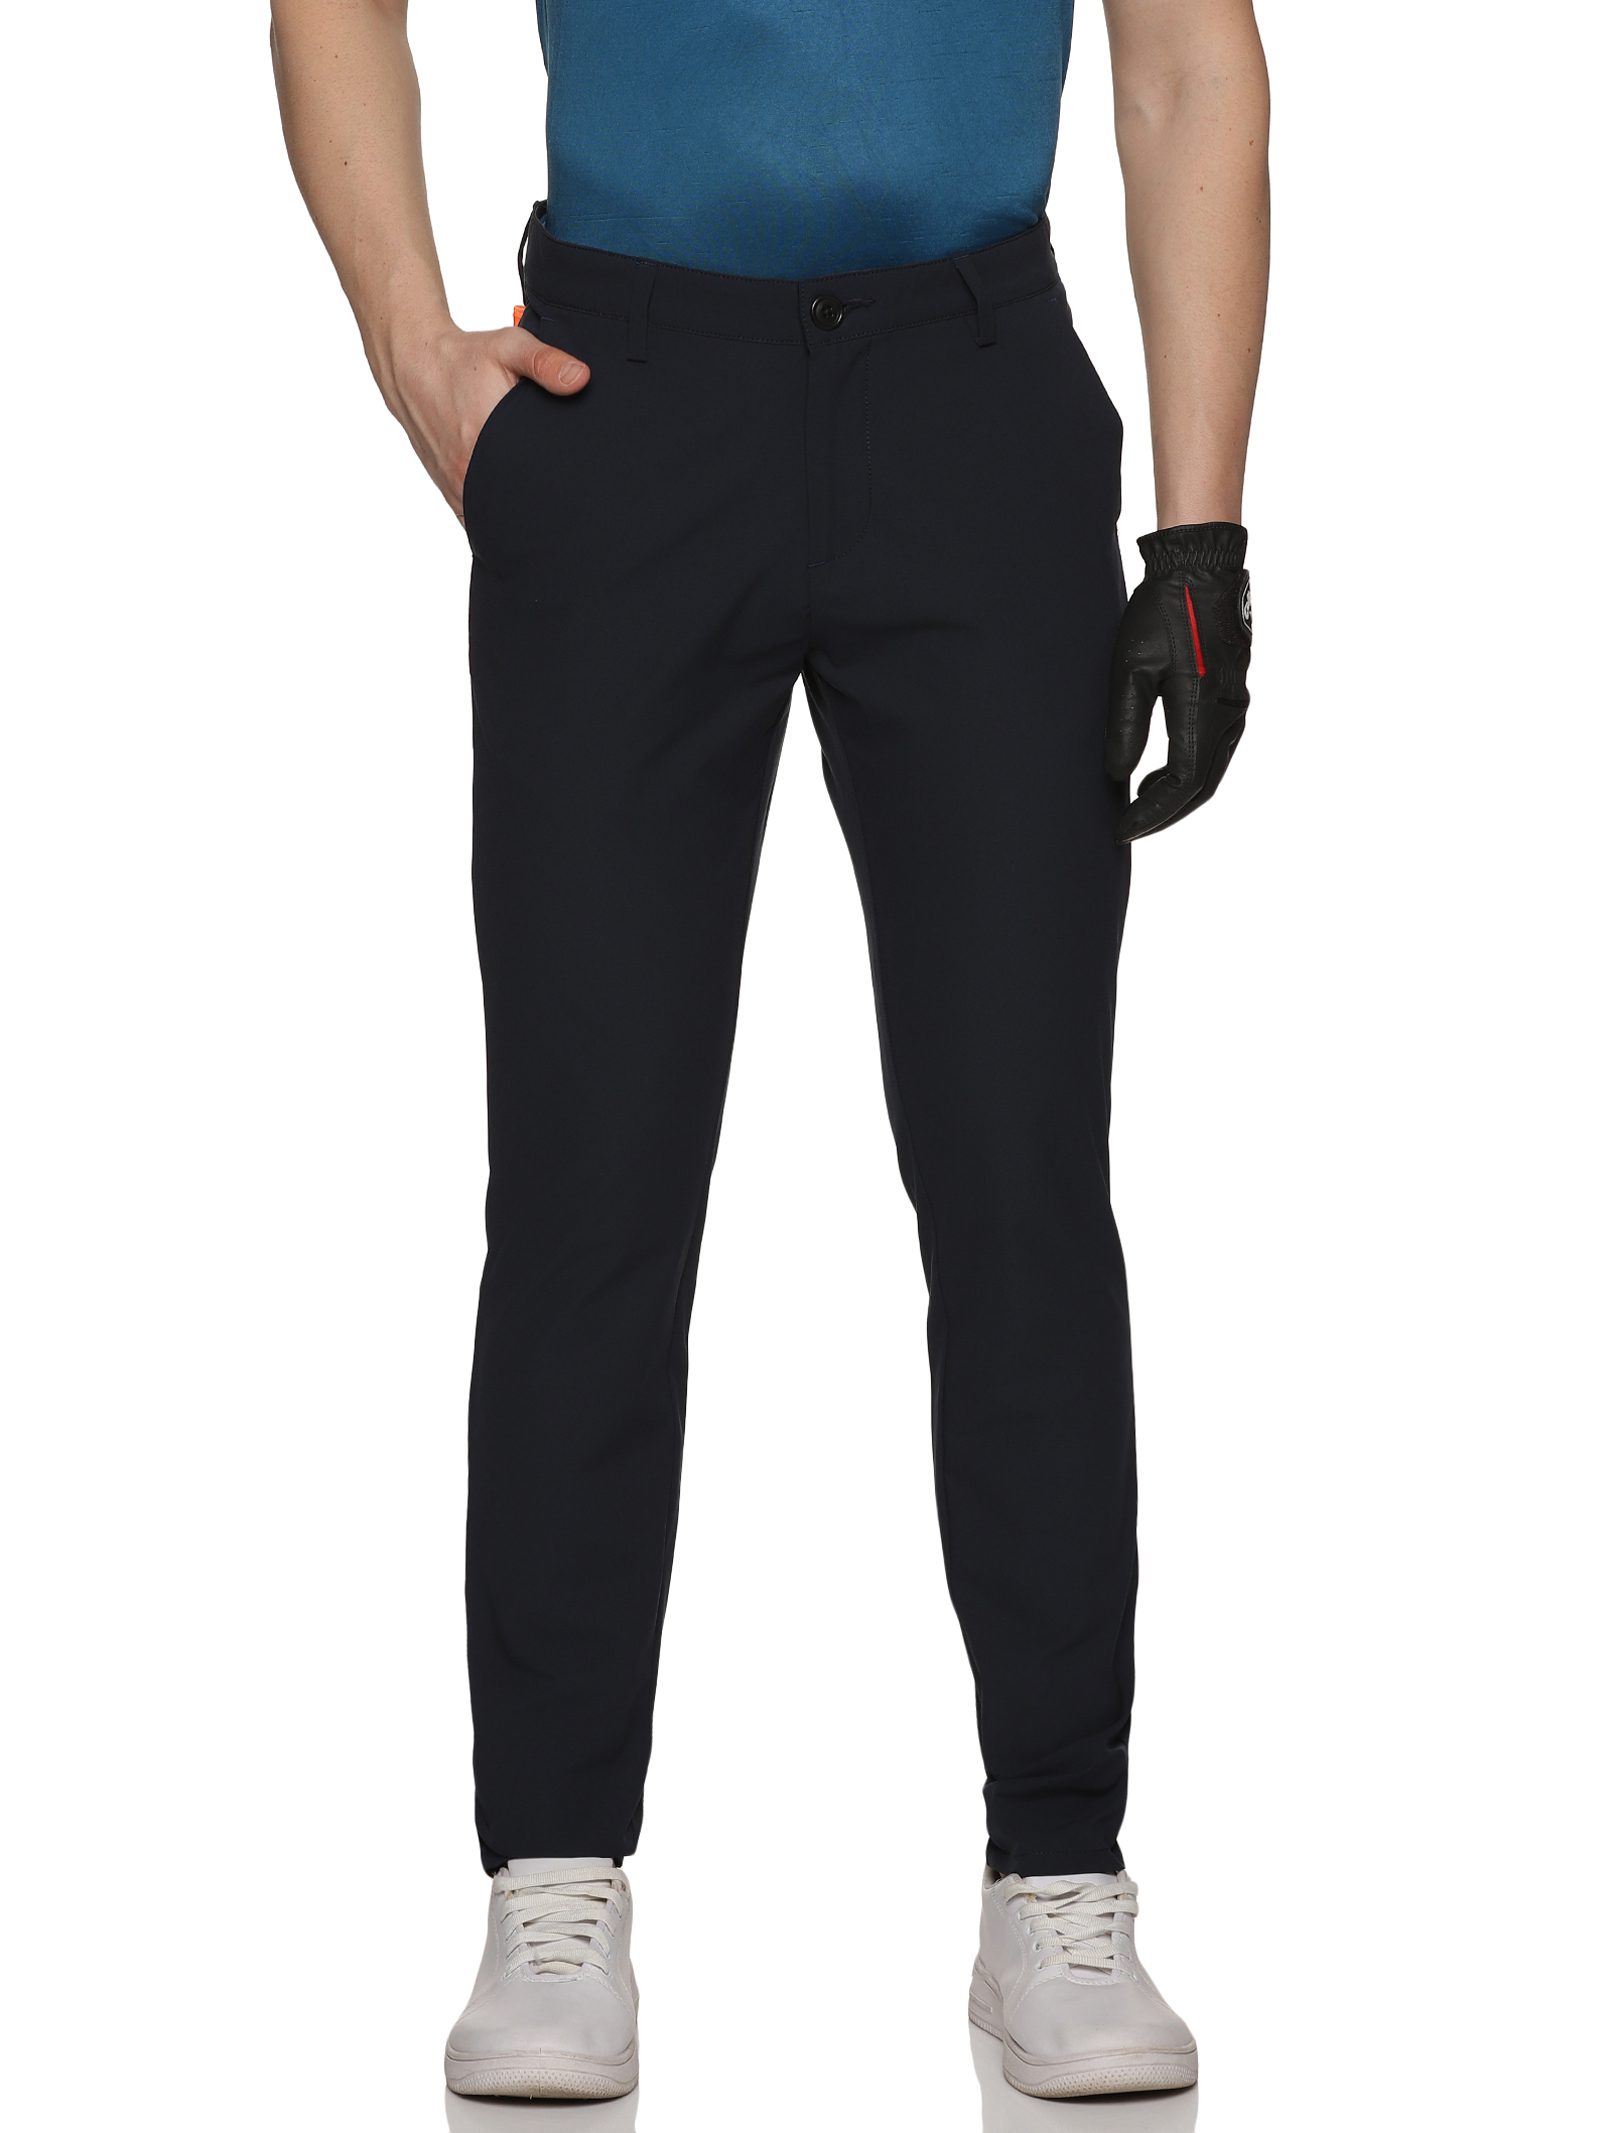 Amazon.com: MAGNIVIT Men's Sweatpant with Zipper Pockets Open Bottom Athletic  Pants for Gym,Workout,Jogging Black : Clothing, Shoes & Jewelry